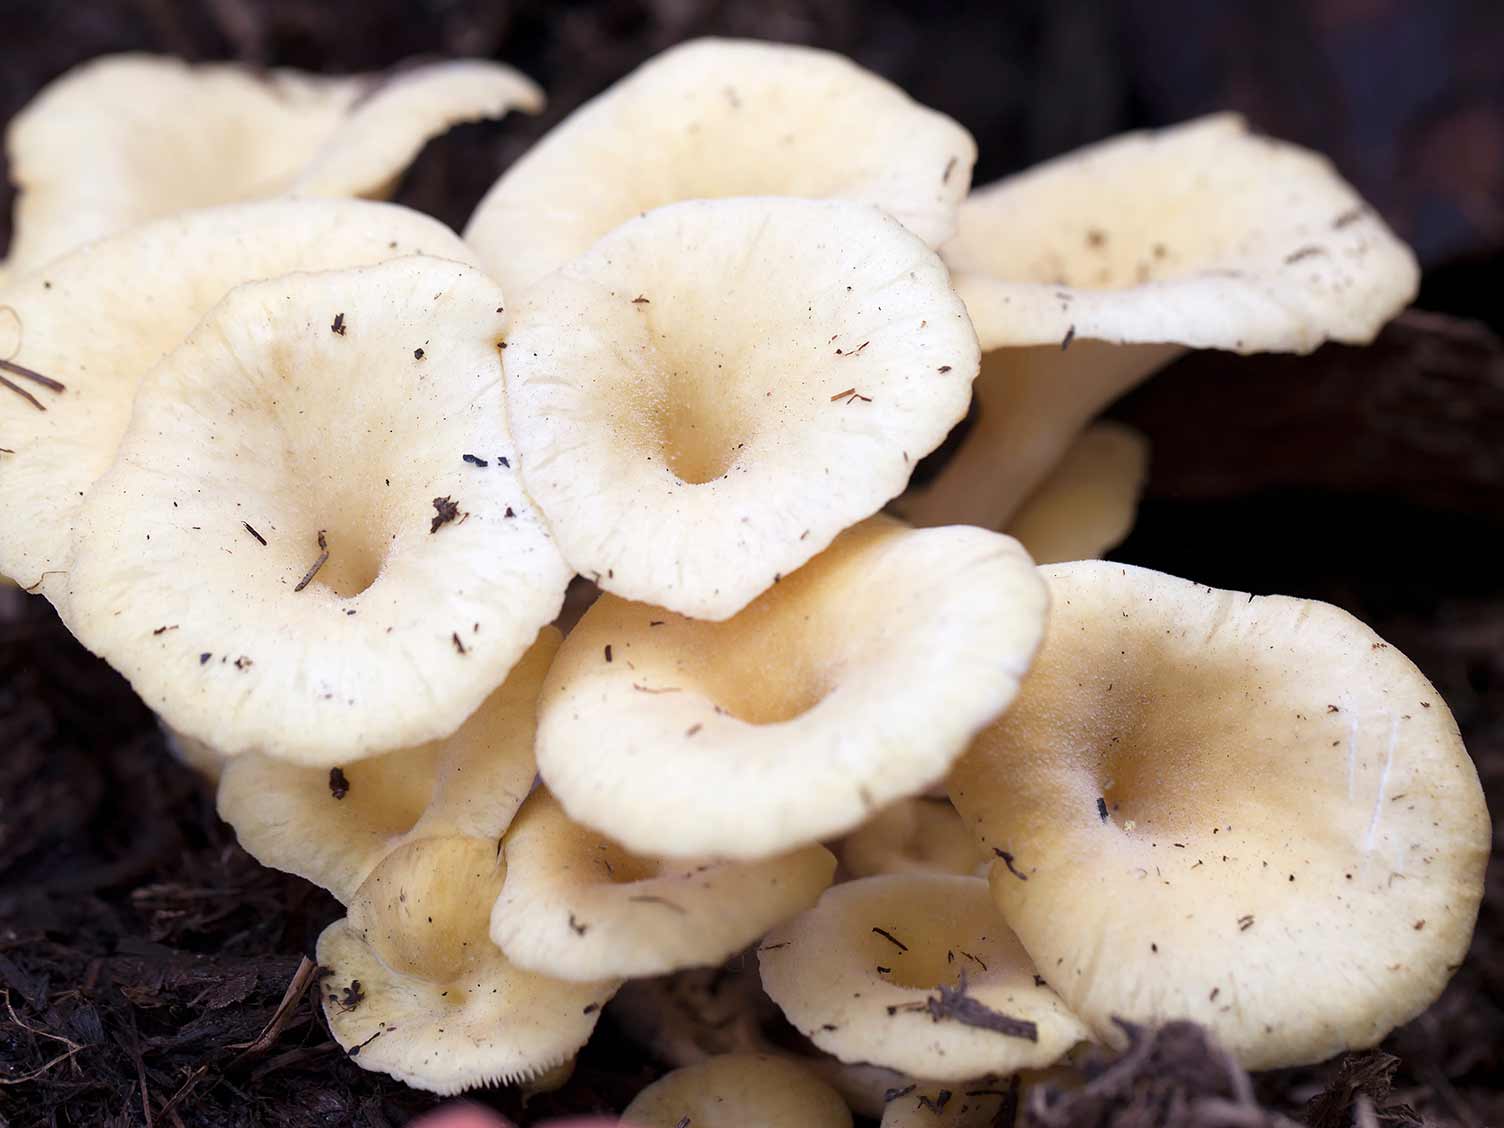 Growing oyster mushrooms